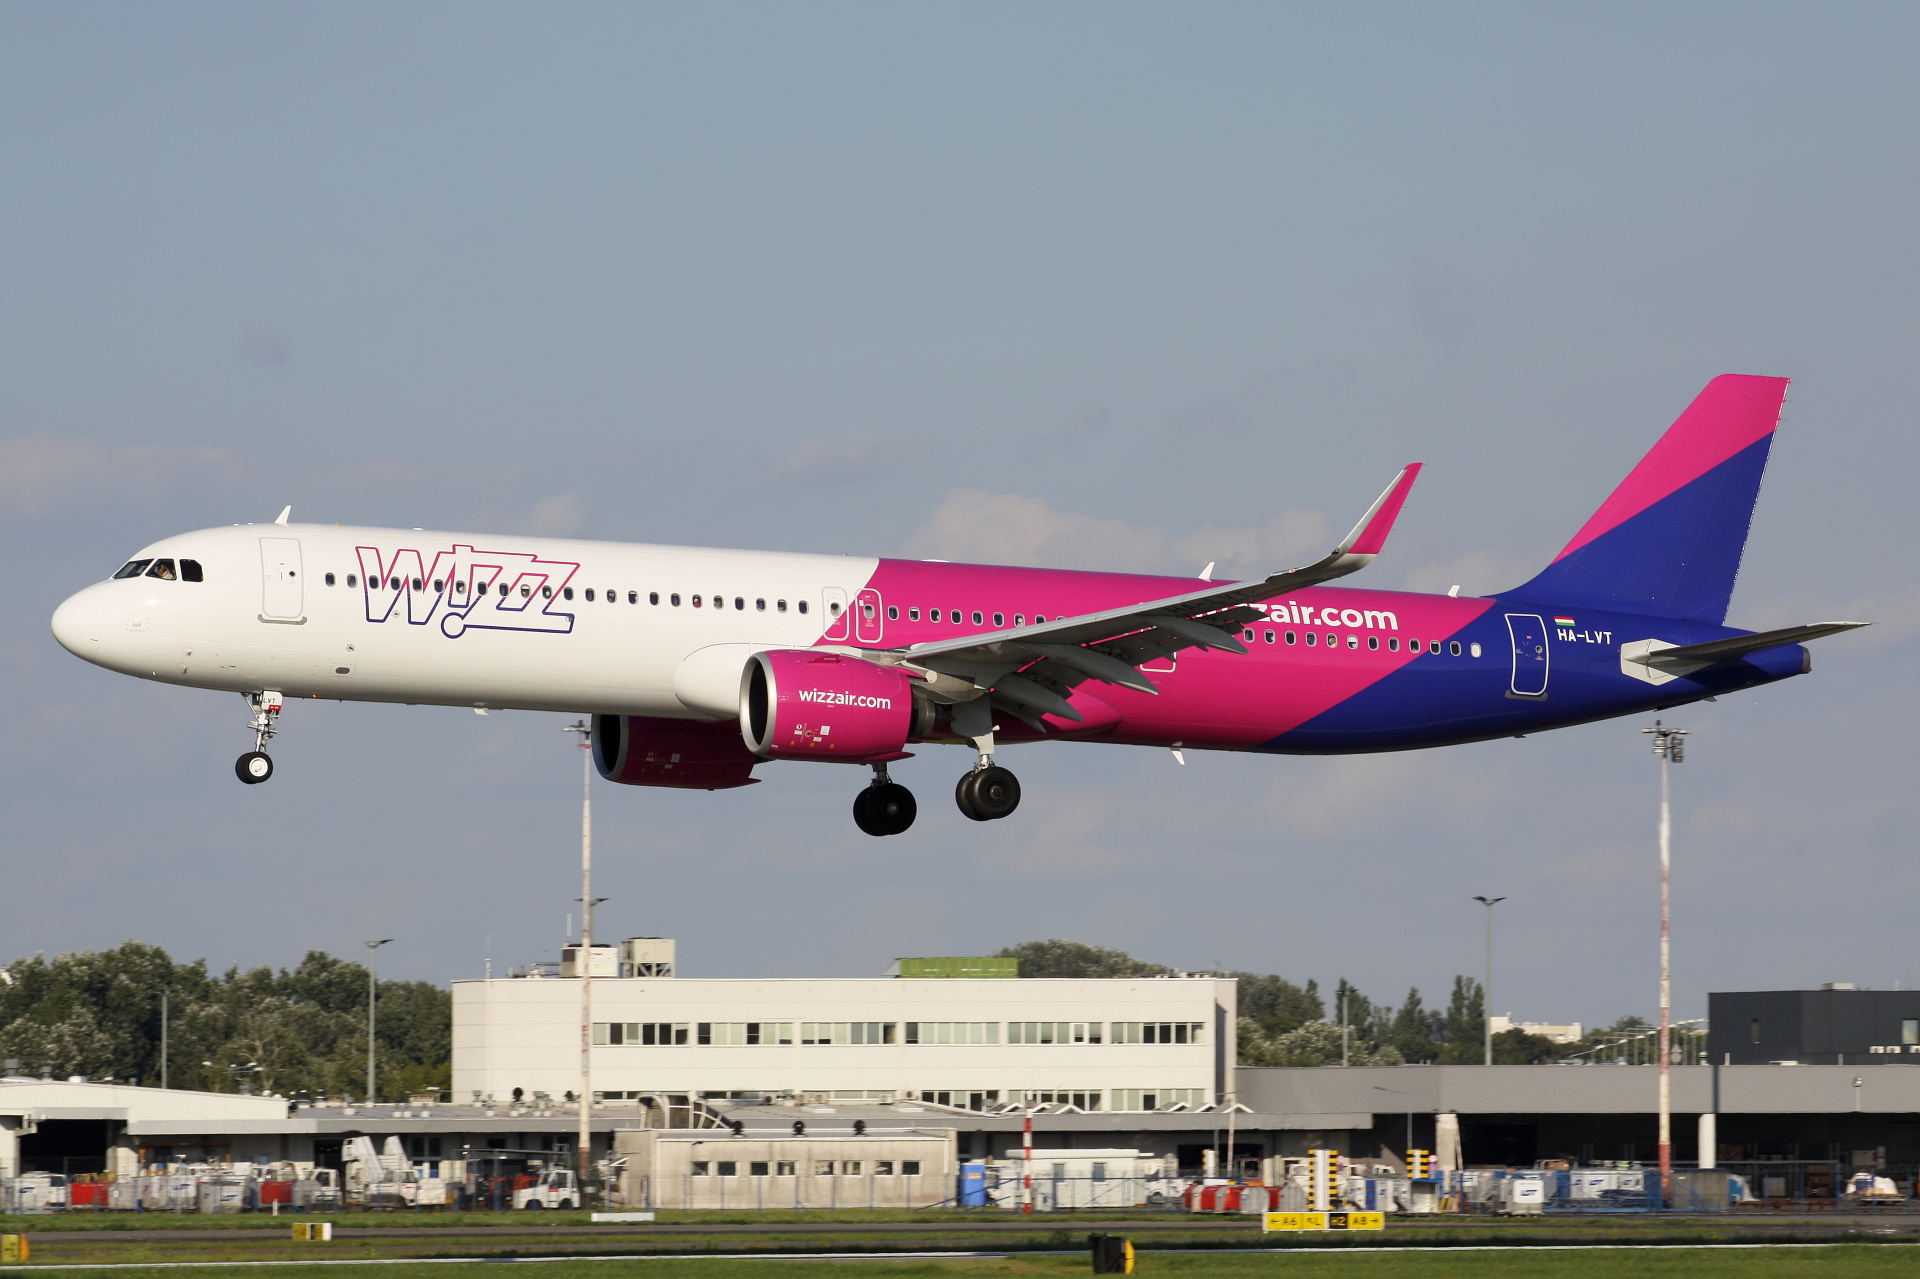 HA-LVT (Aircraft » EPWA Spotting » Airbus A321neo » Wizz Air)